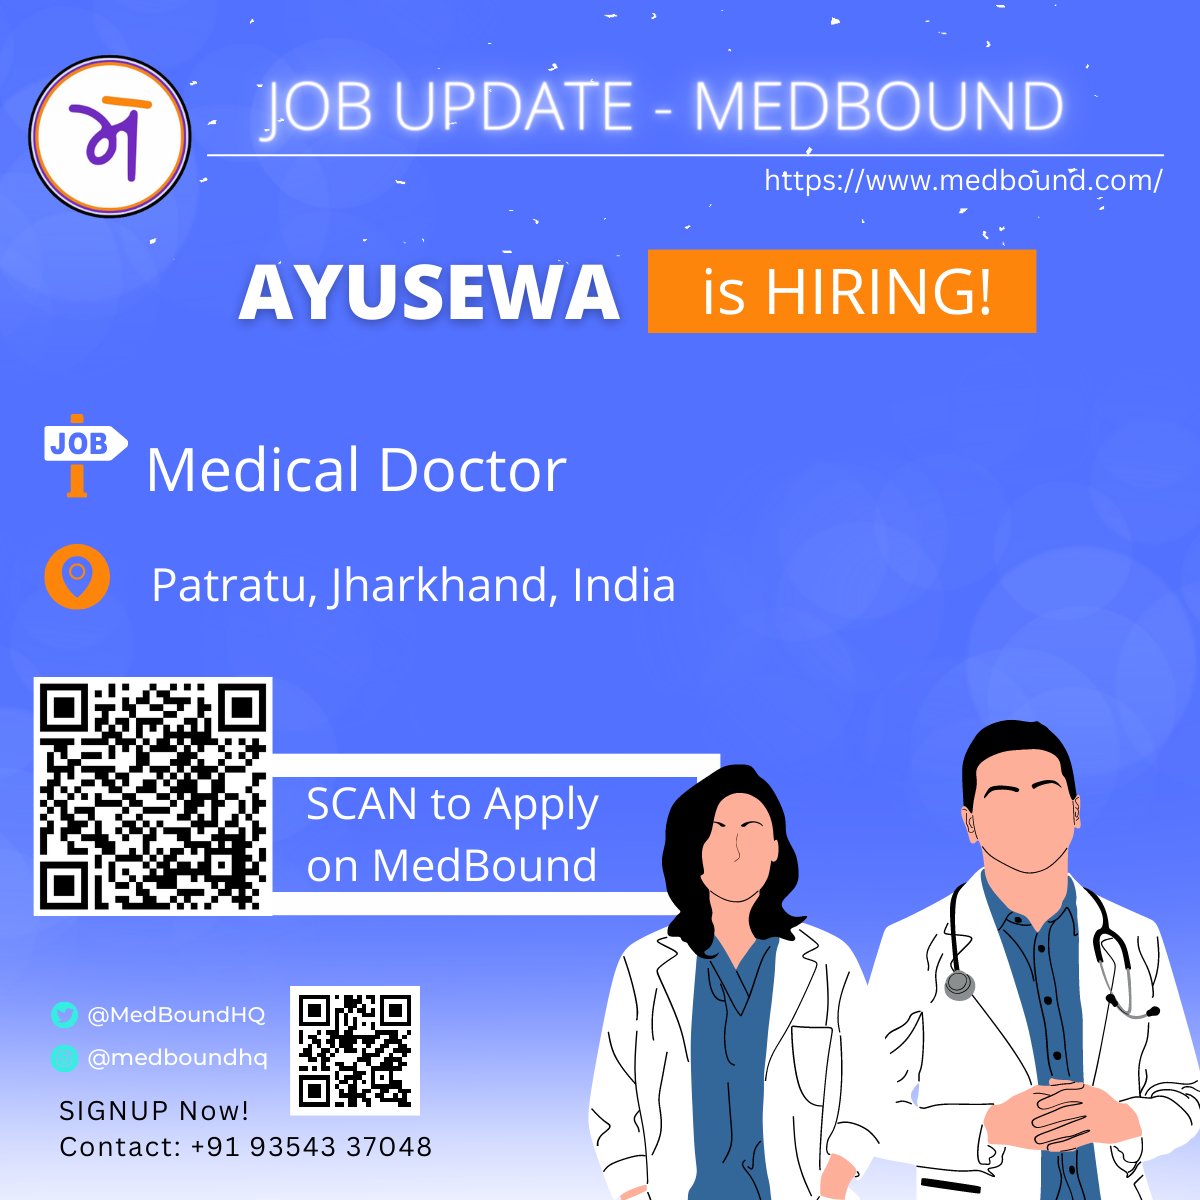 🚩 NEW Opportunity - MedBound

AyuSewa is looking for Medical Doctor!

🔹 Apply on MedBound - medbound.com/job-details/9d…

@ServiceSanmat #medtwitter